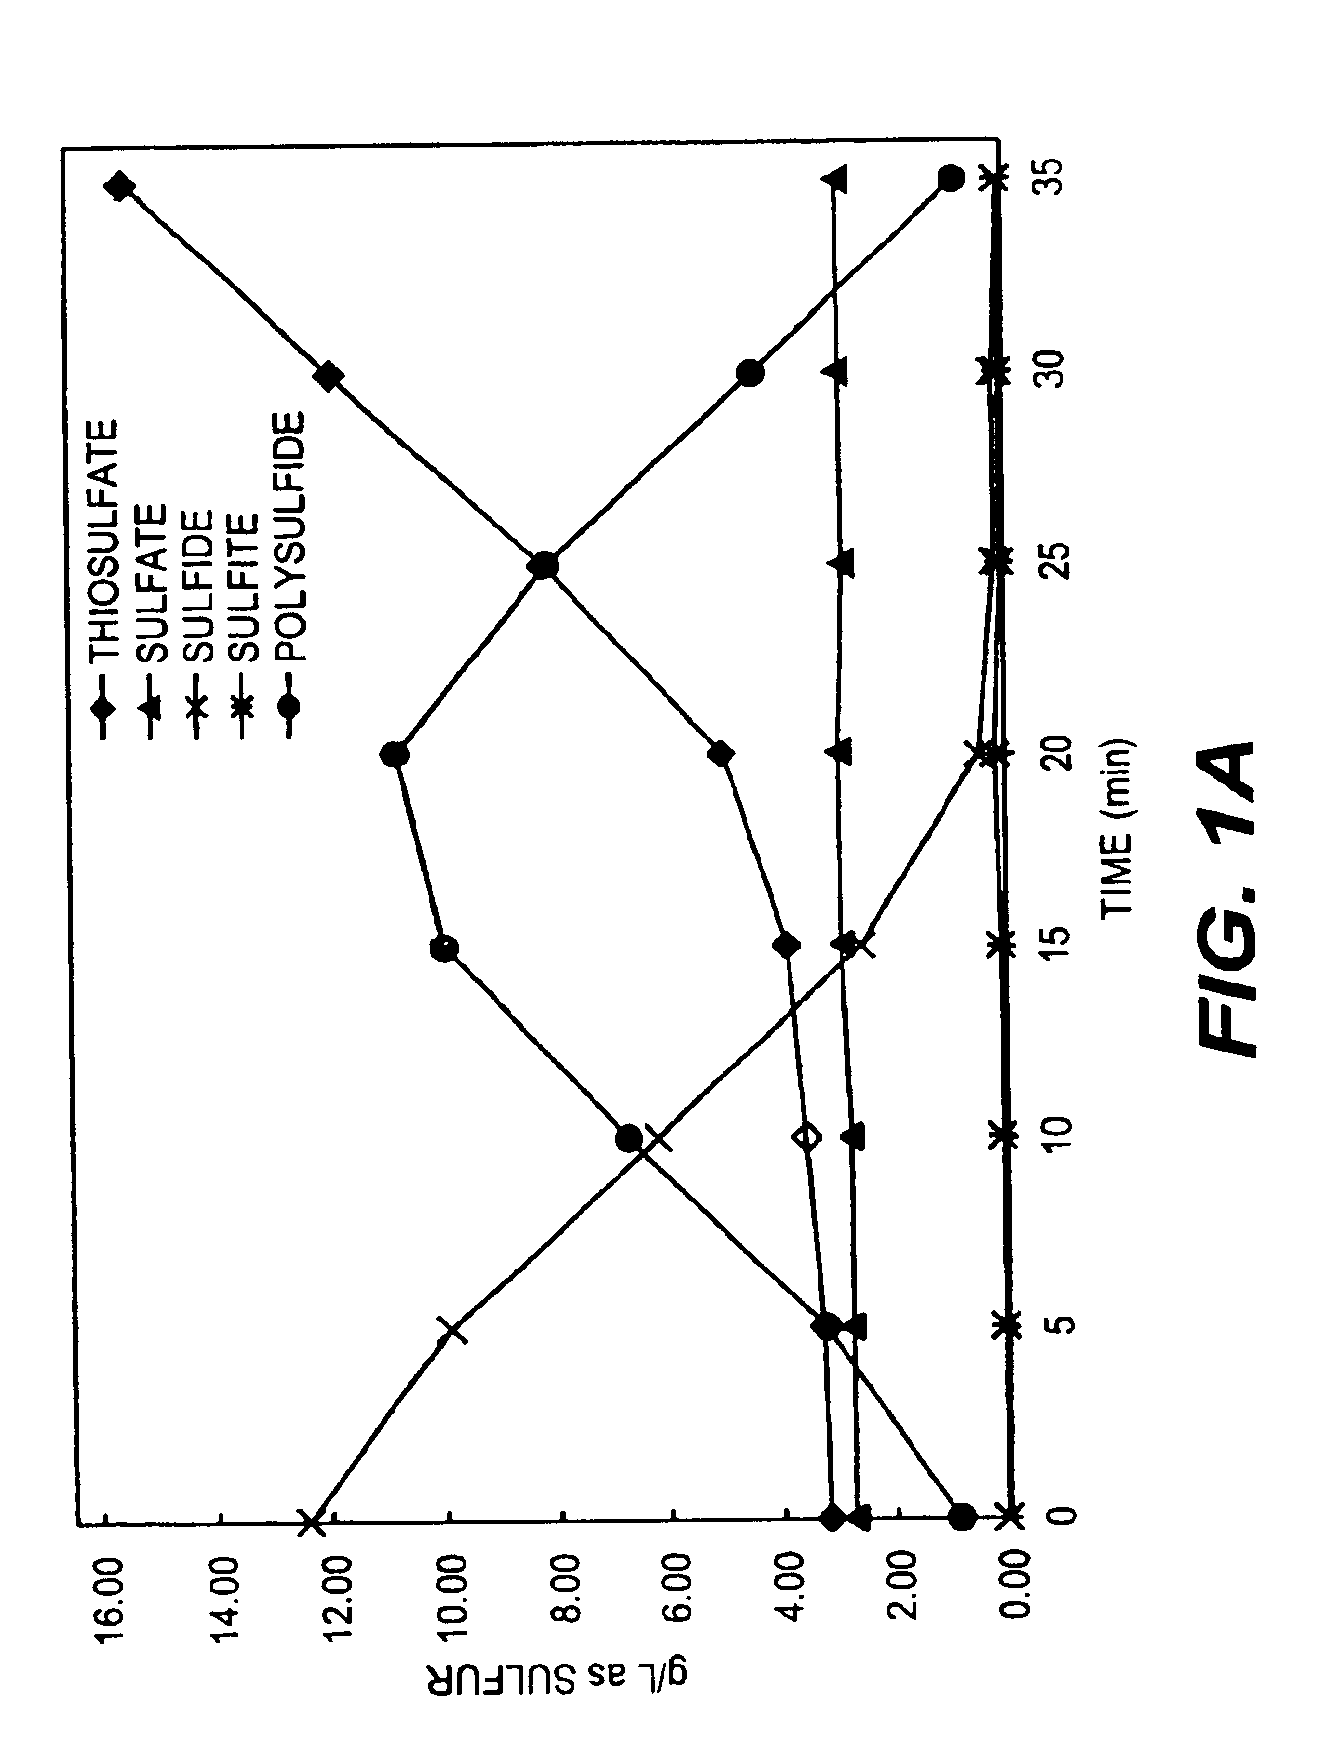 Polysulfide measurement methods using colormetric techniques